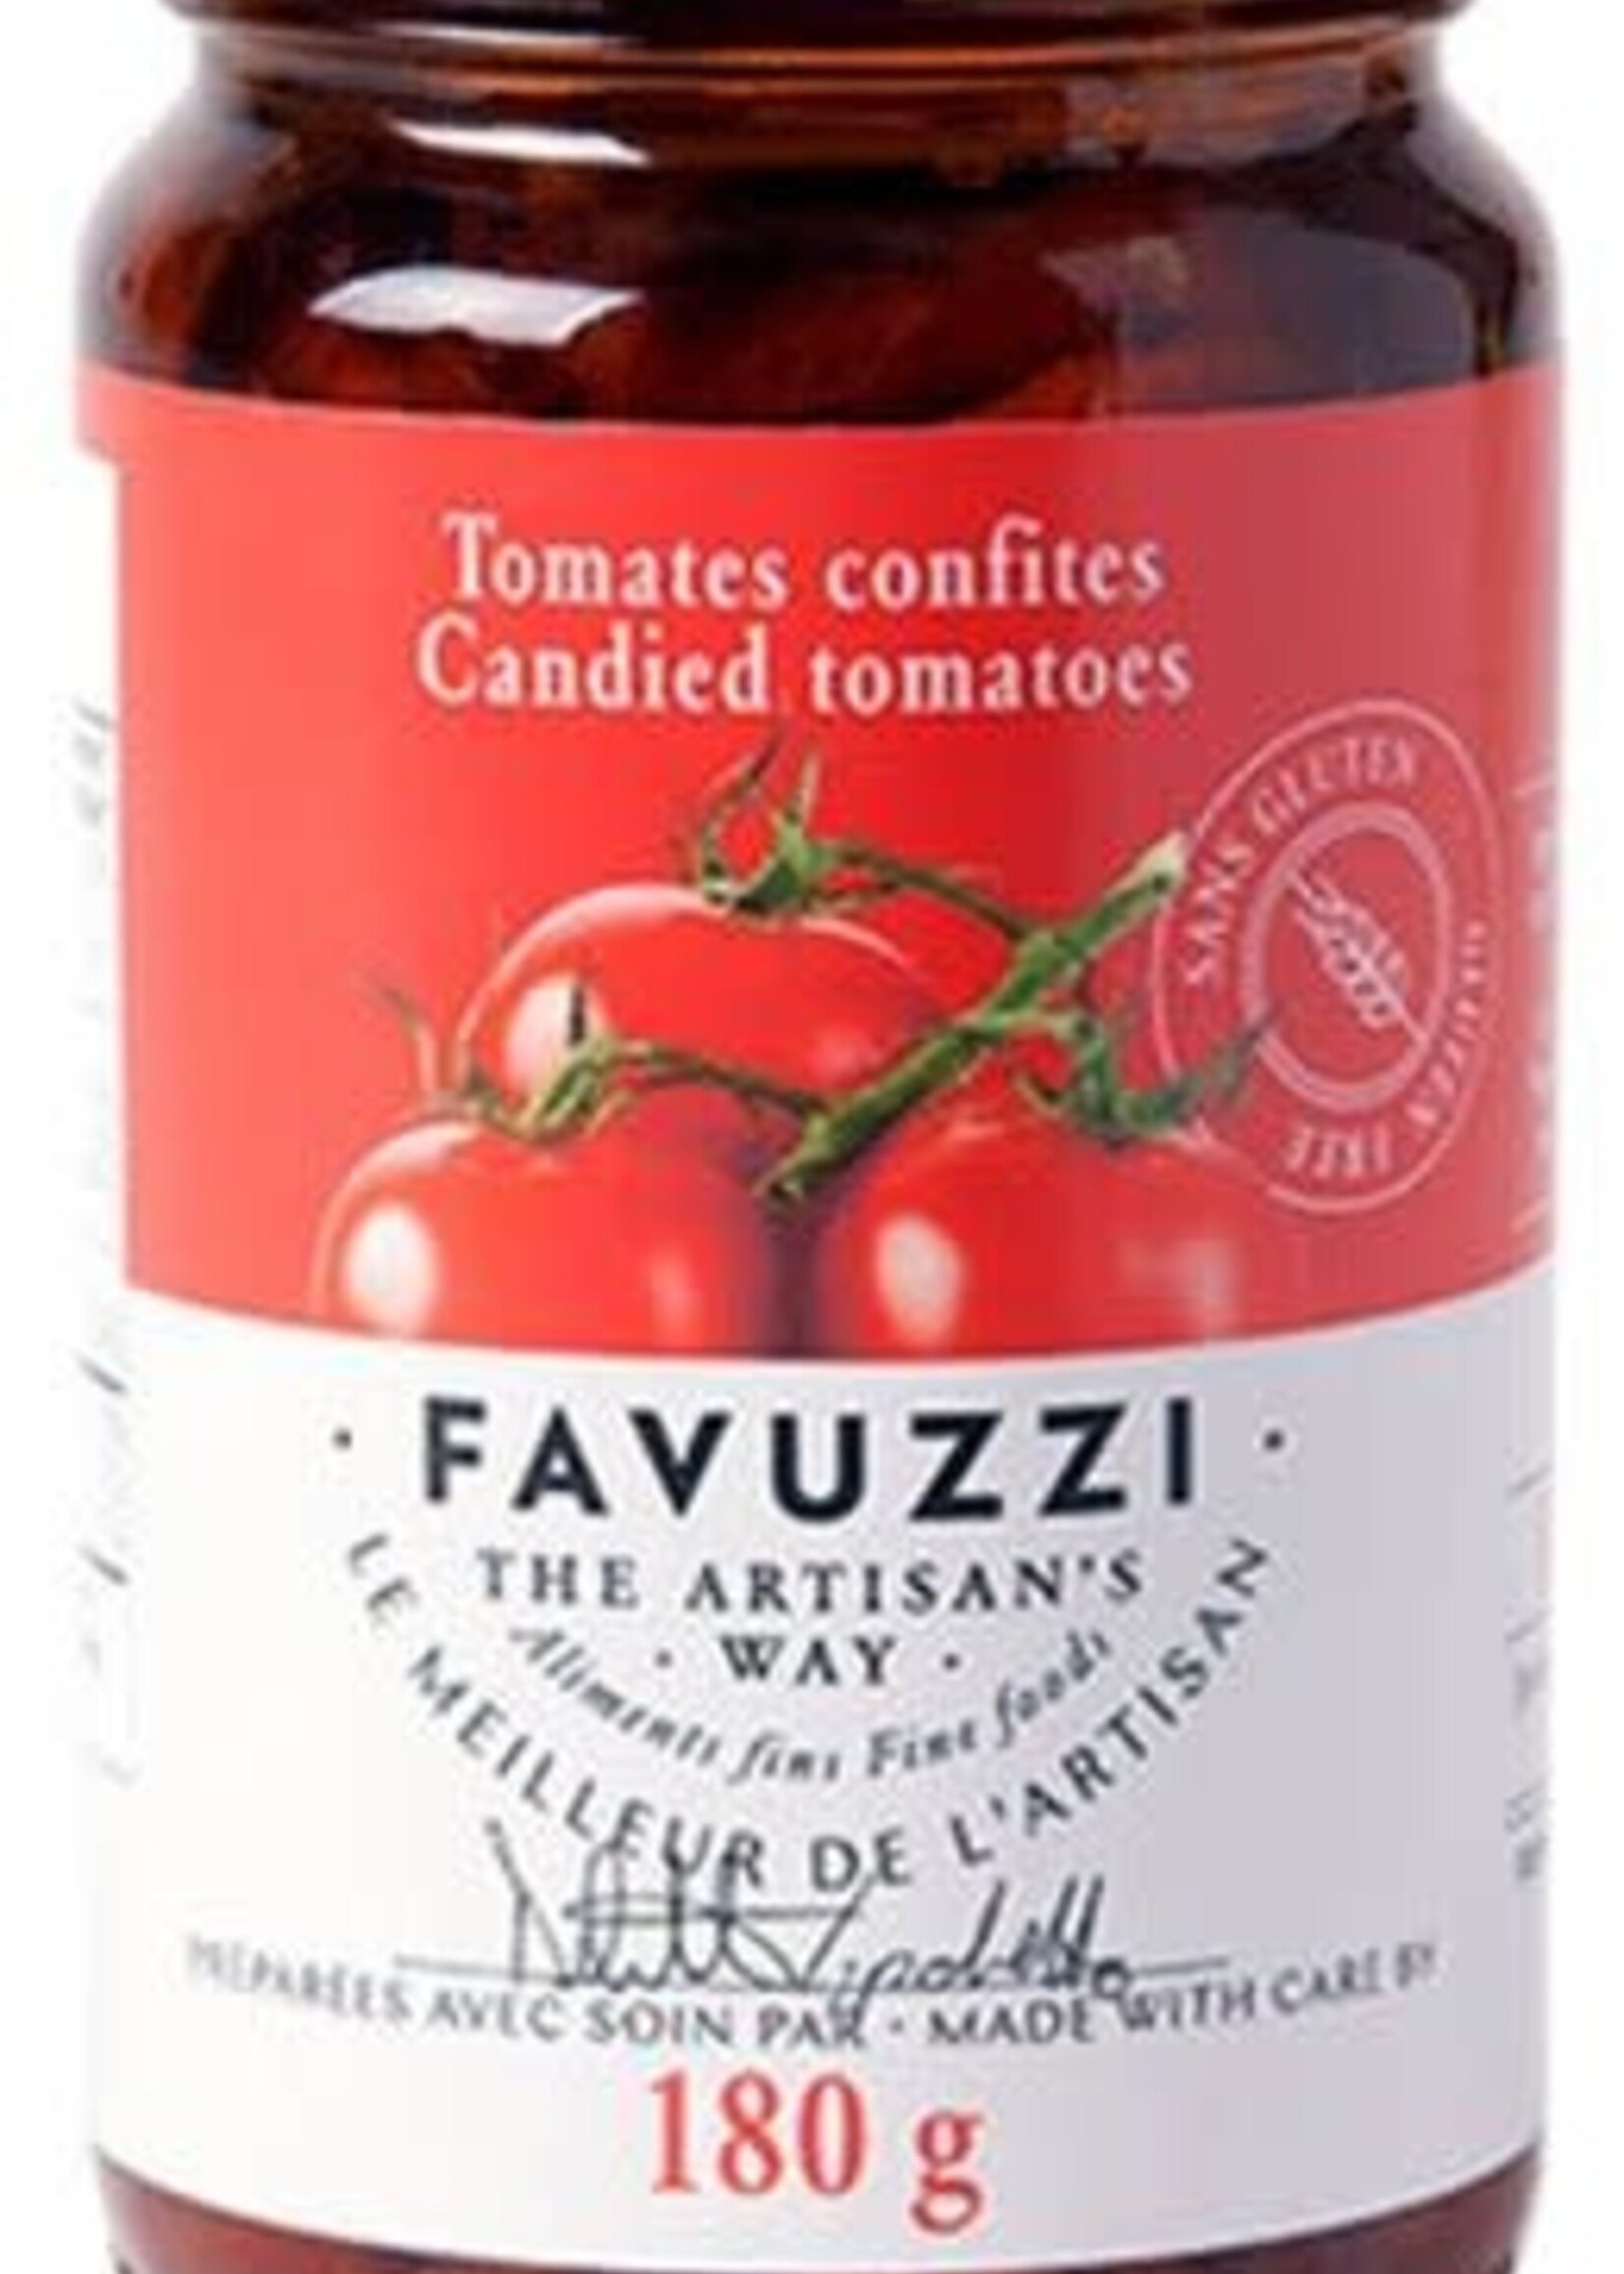 *180g Candied Tomatoes-Favuzzi